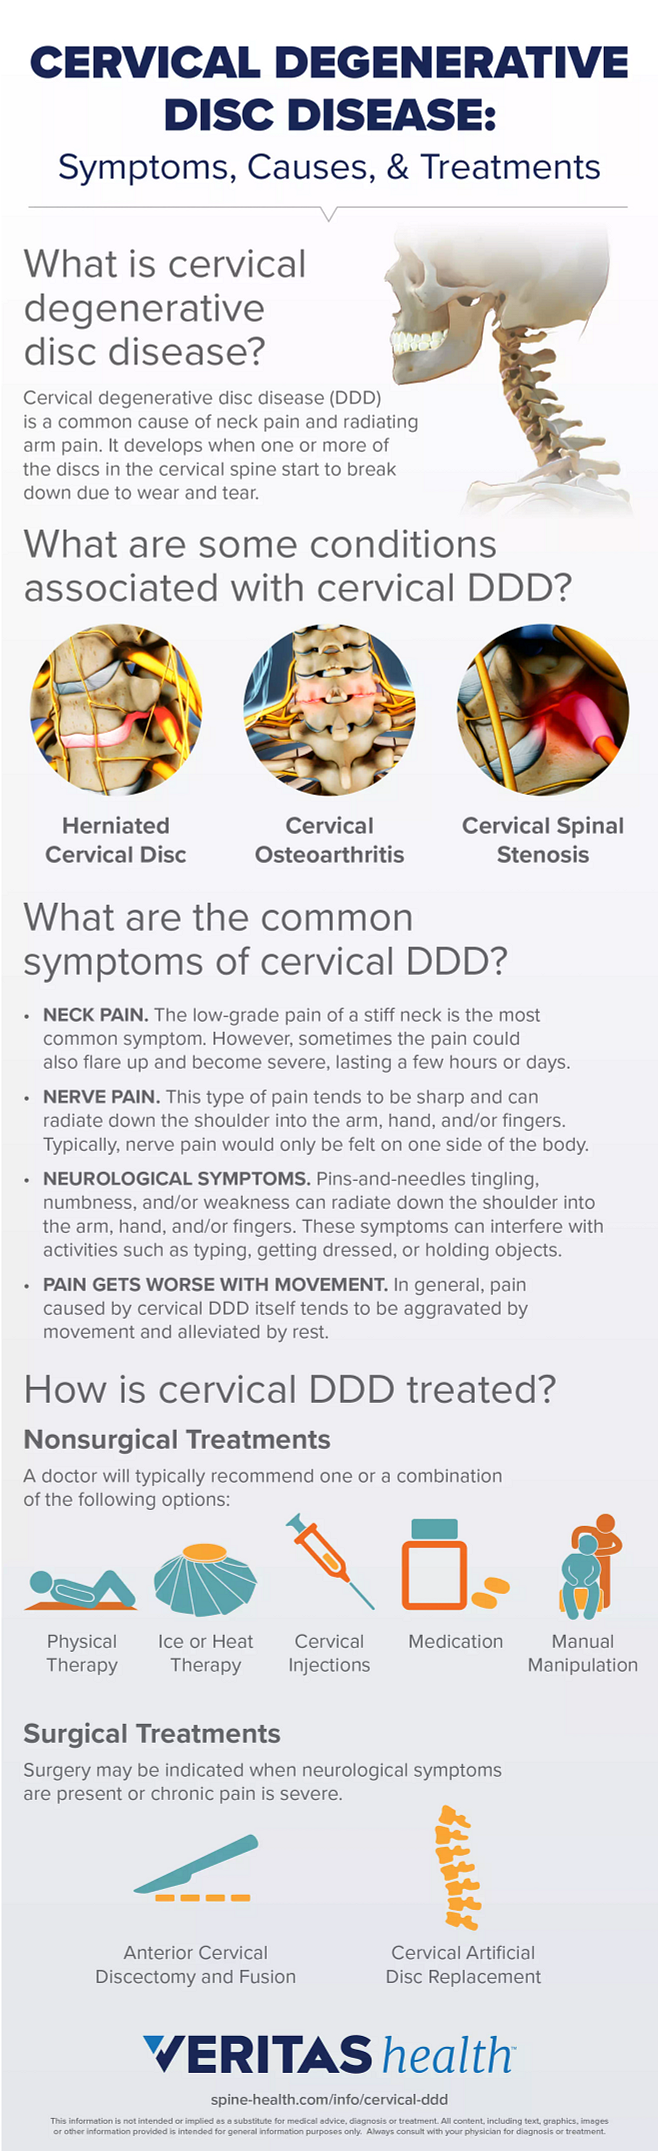 Cervical Degenerative Disc Disease